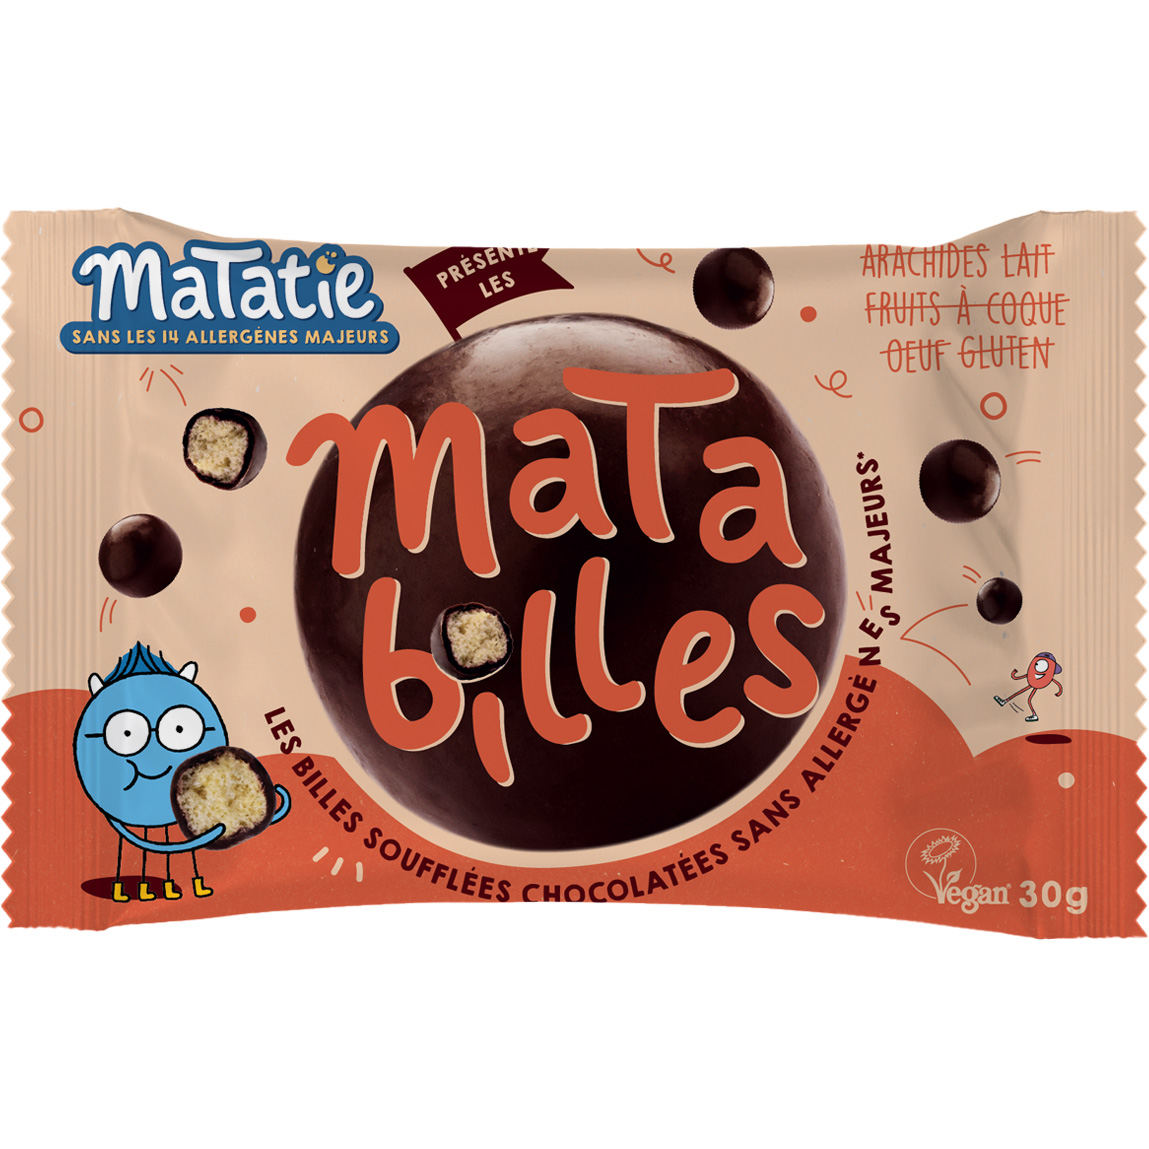 Matatie: Matabilles for allergen-free treatment